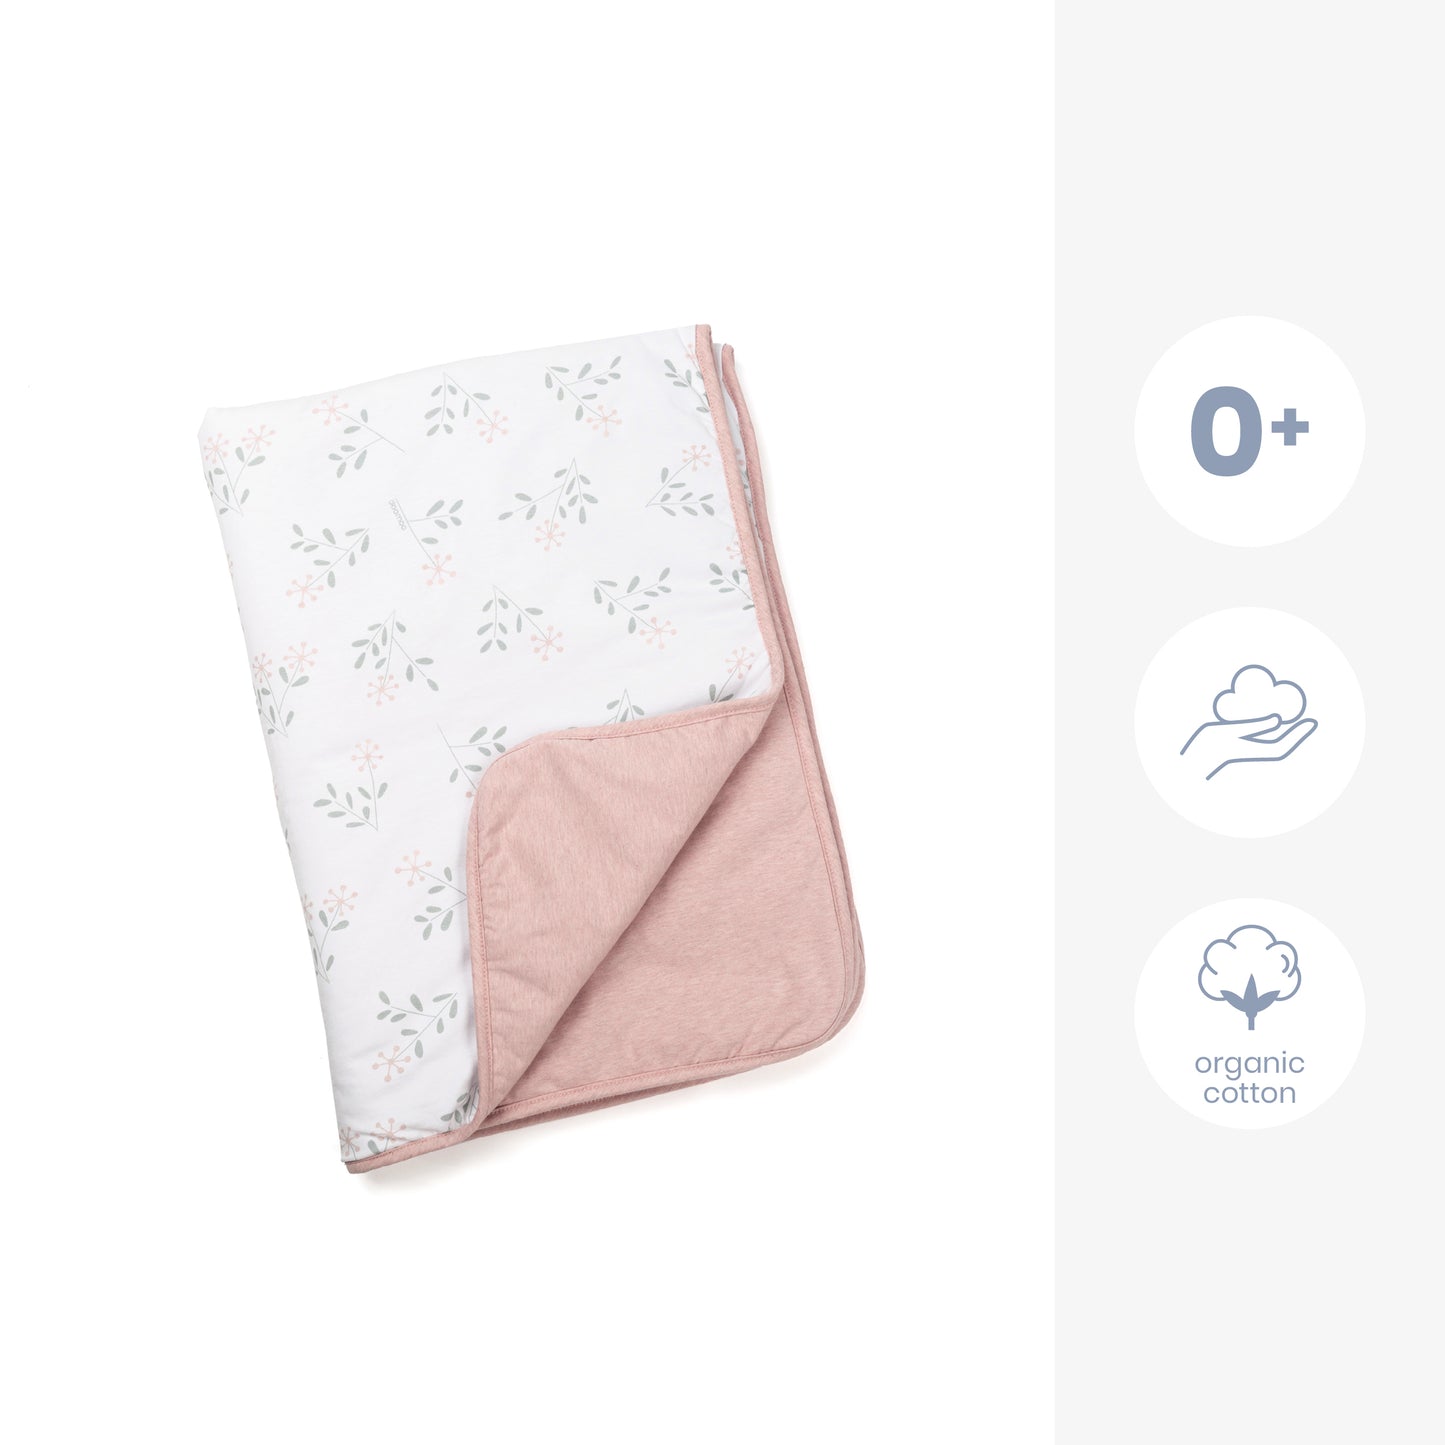 Ultra soft baby blanket in organic cotton - doomoo dream Spring Pink